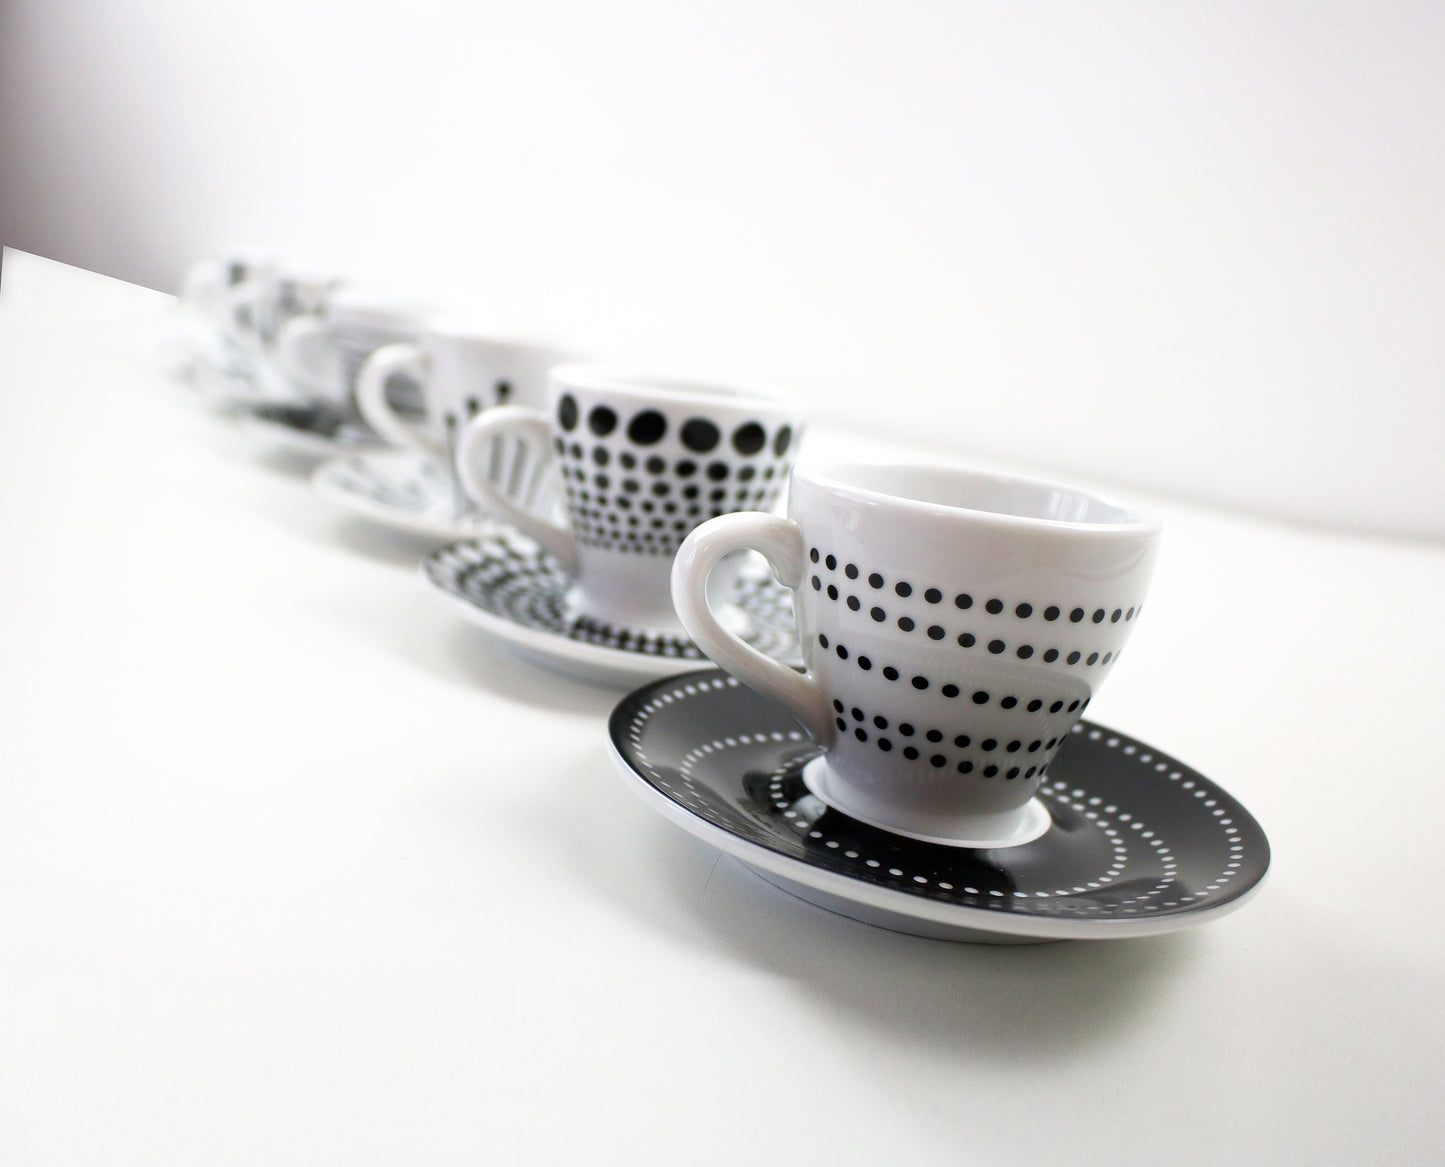 Paula by Bodum Denmark - black and white espresso cup and saucer set